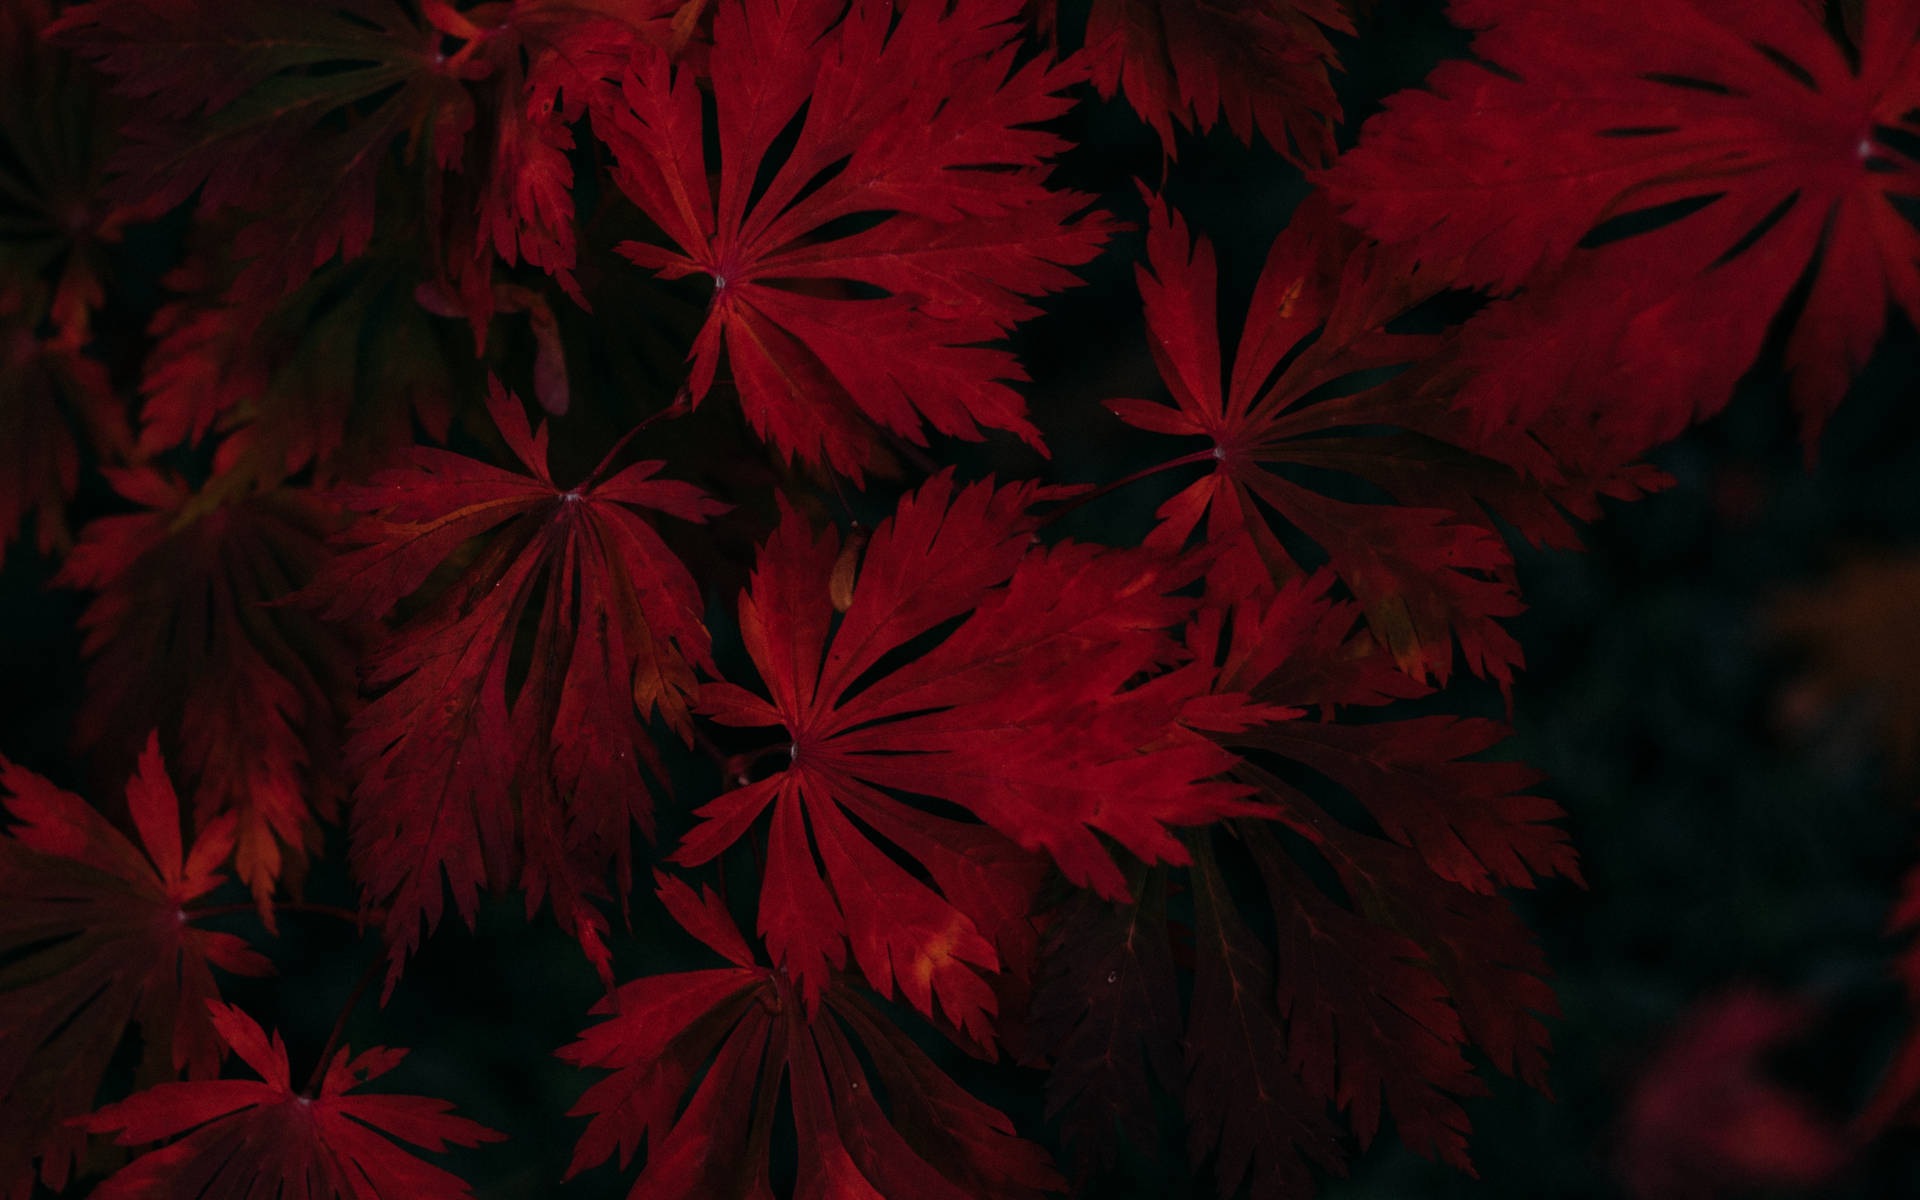 Autumn Majesty – Dark Red Maple Leaves